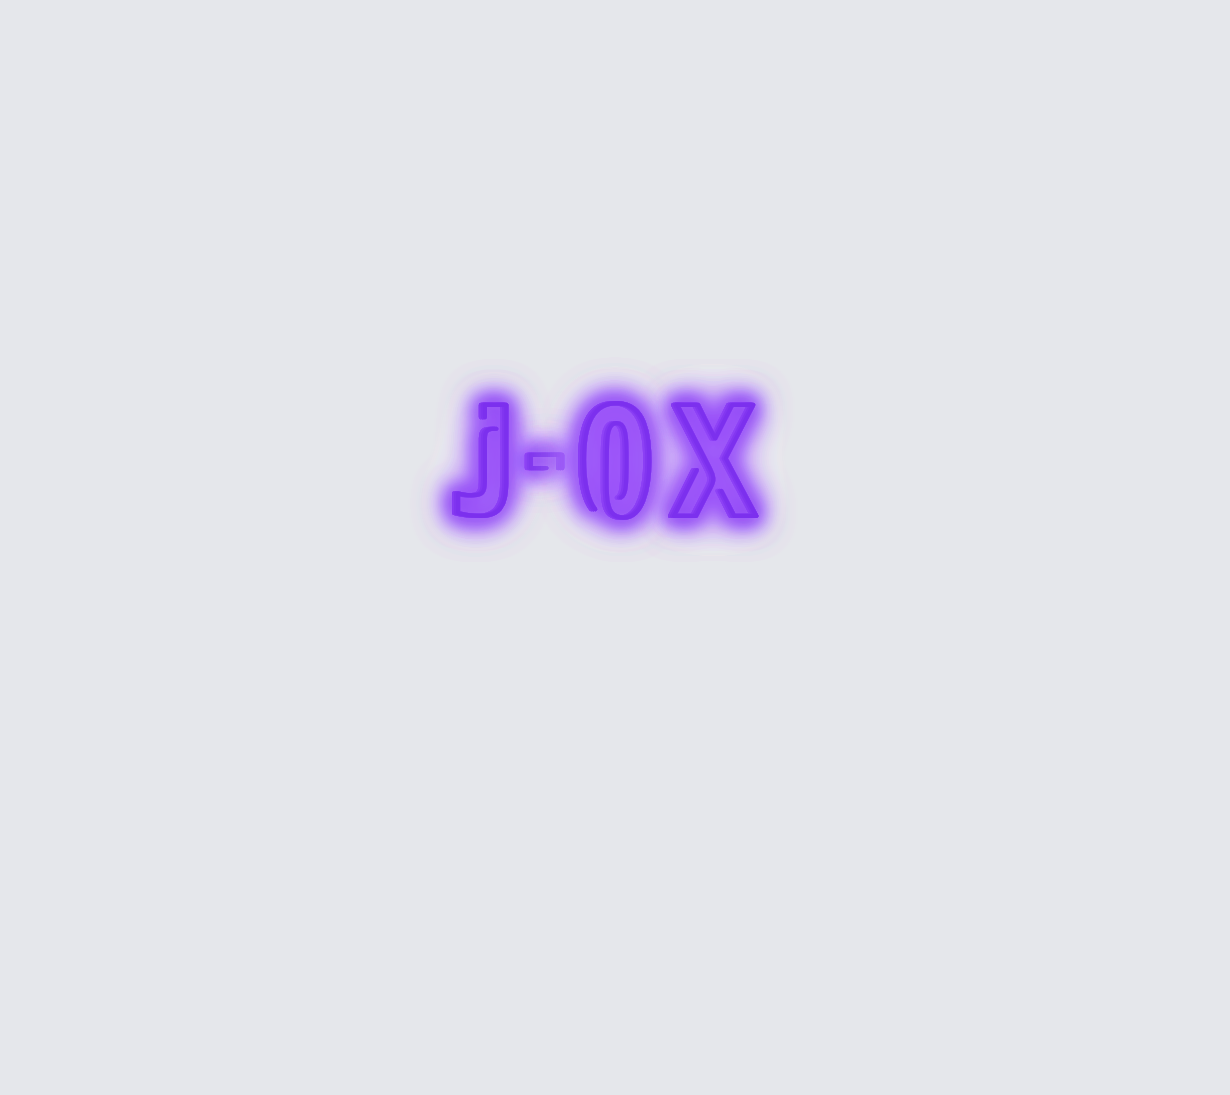 Custom neon sign - J-Ox